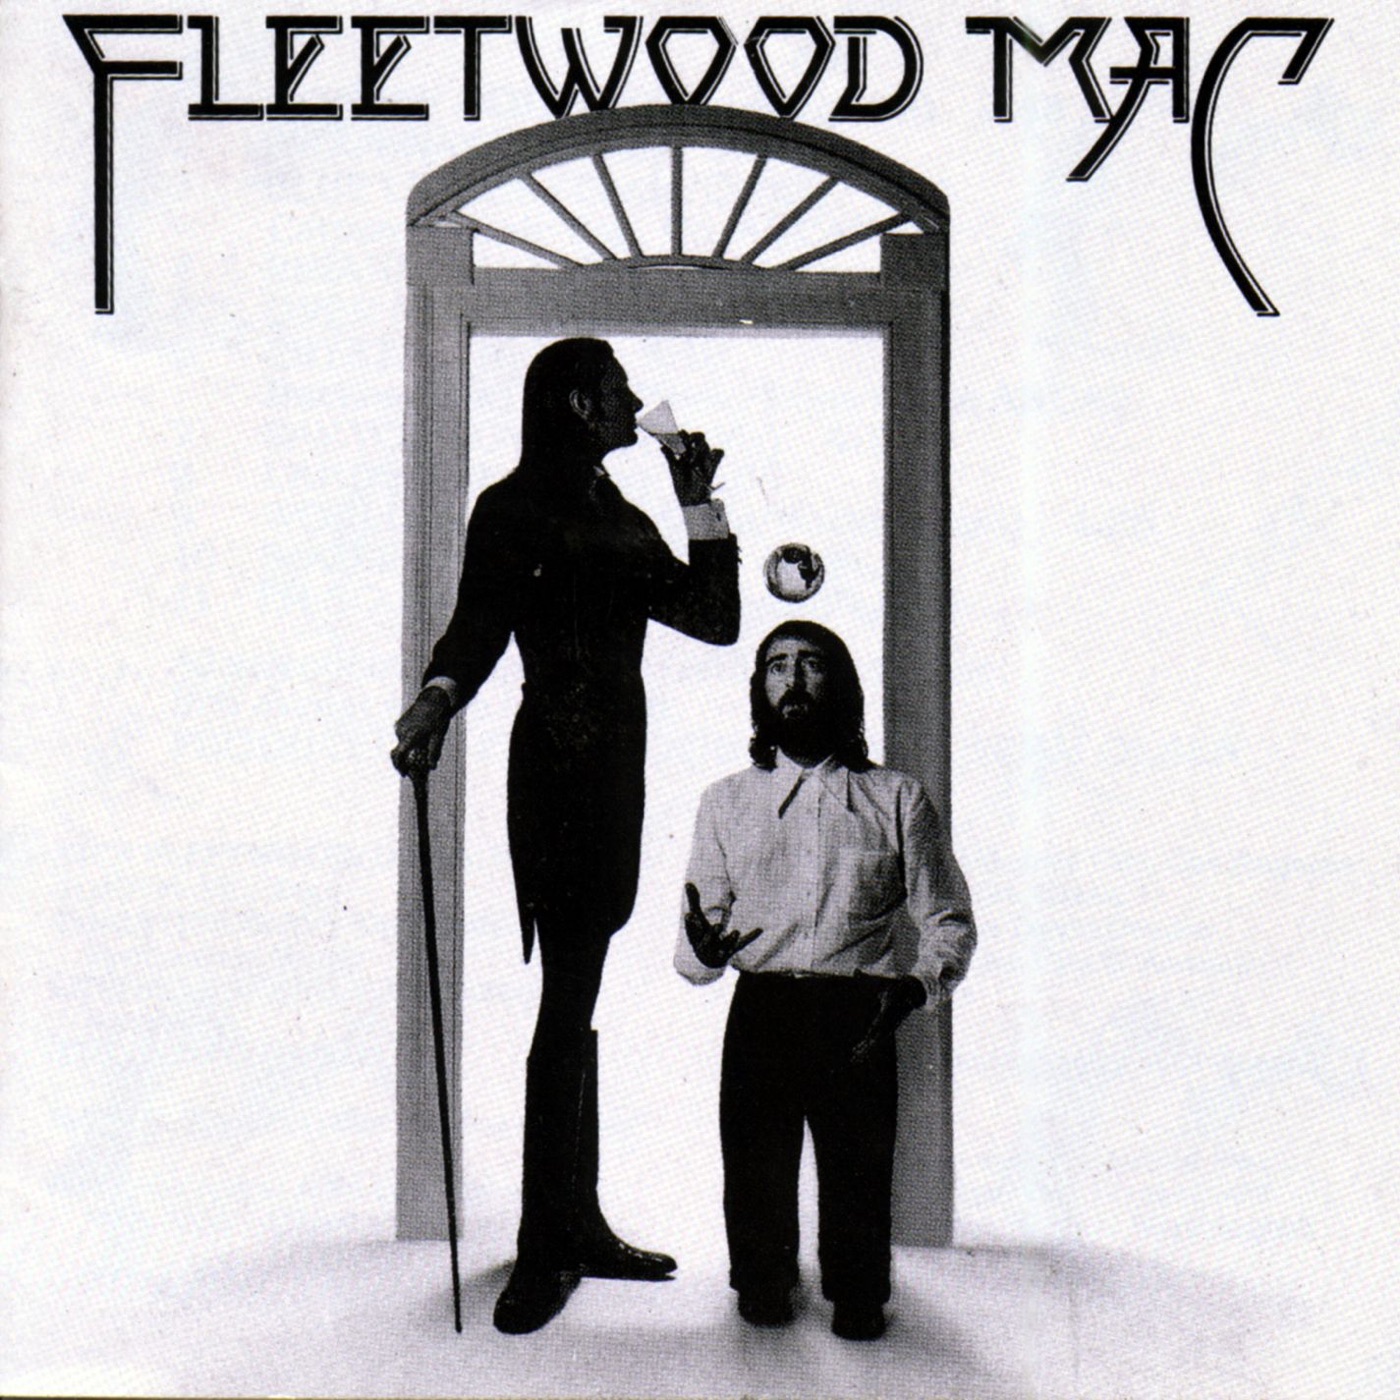 Fleetwood Mac by Fleetwood Mac